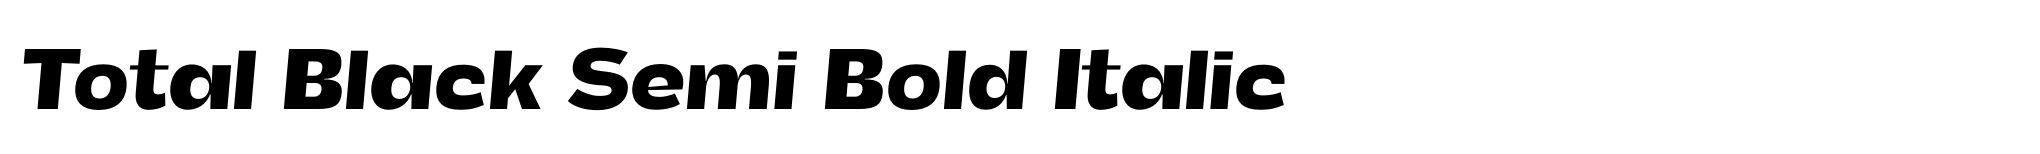 Total Black Semi Bold Italic image